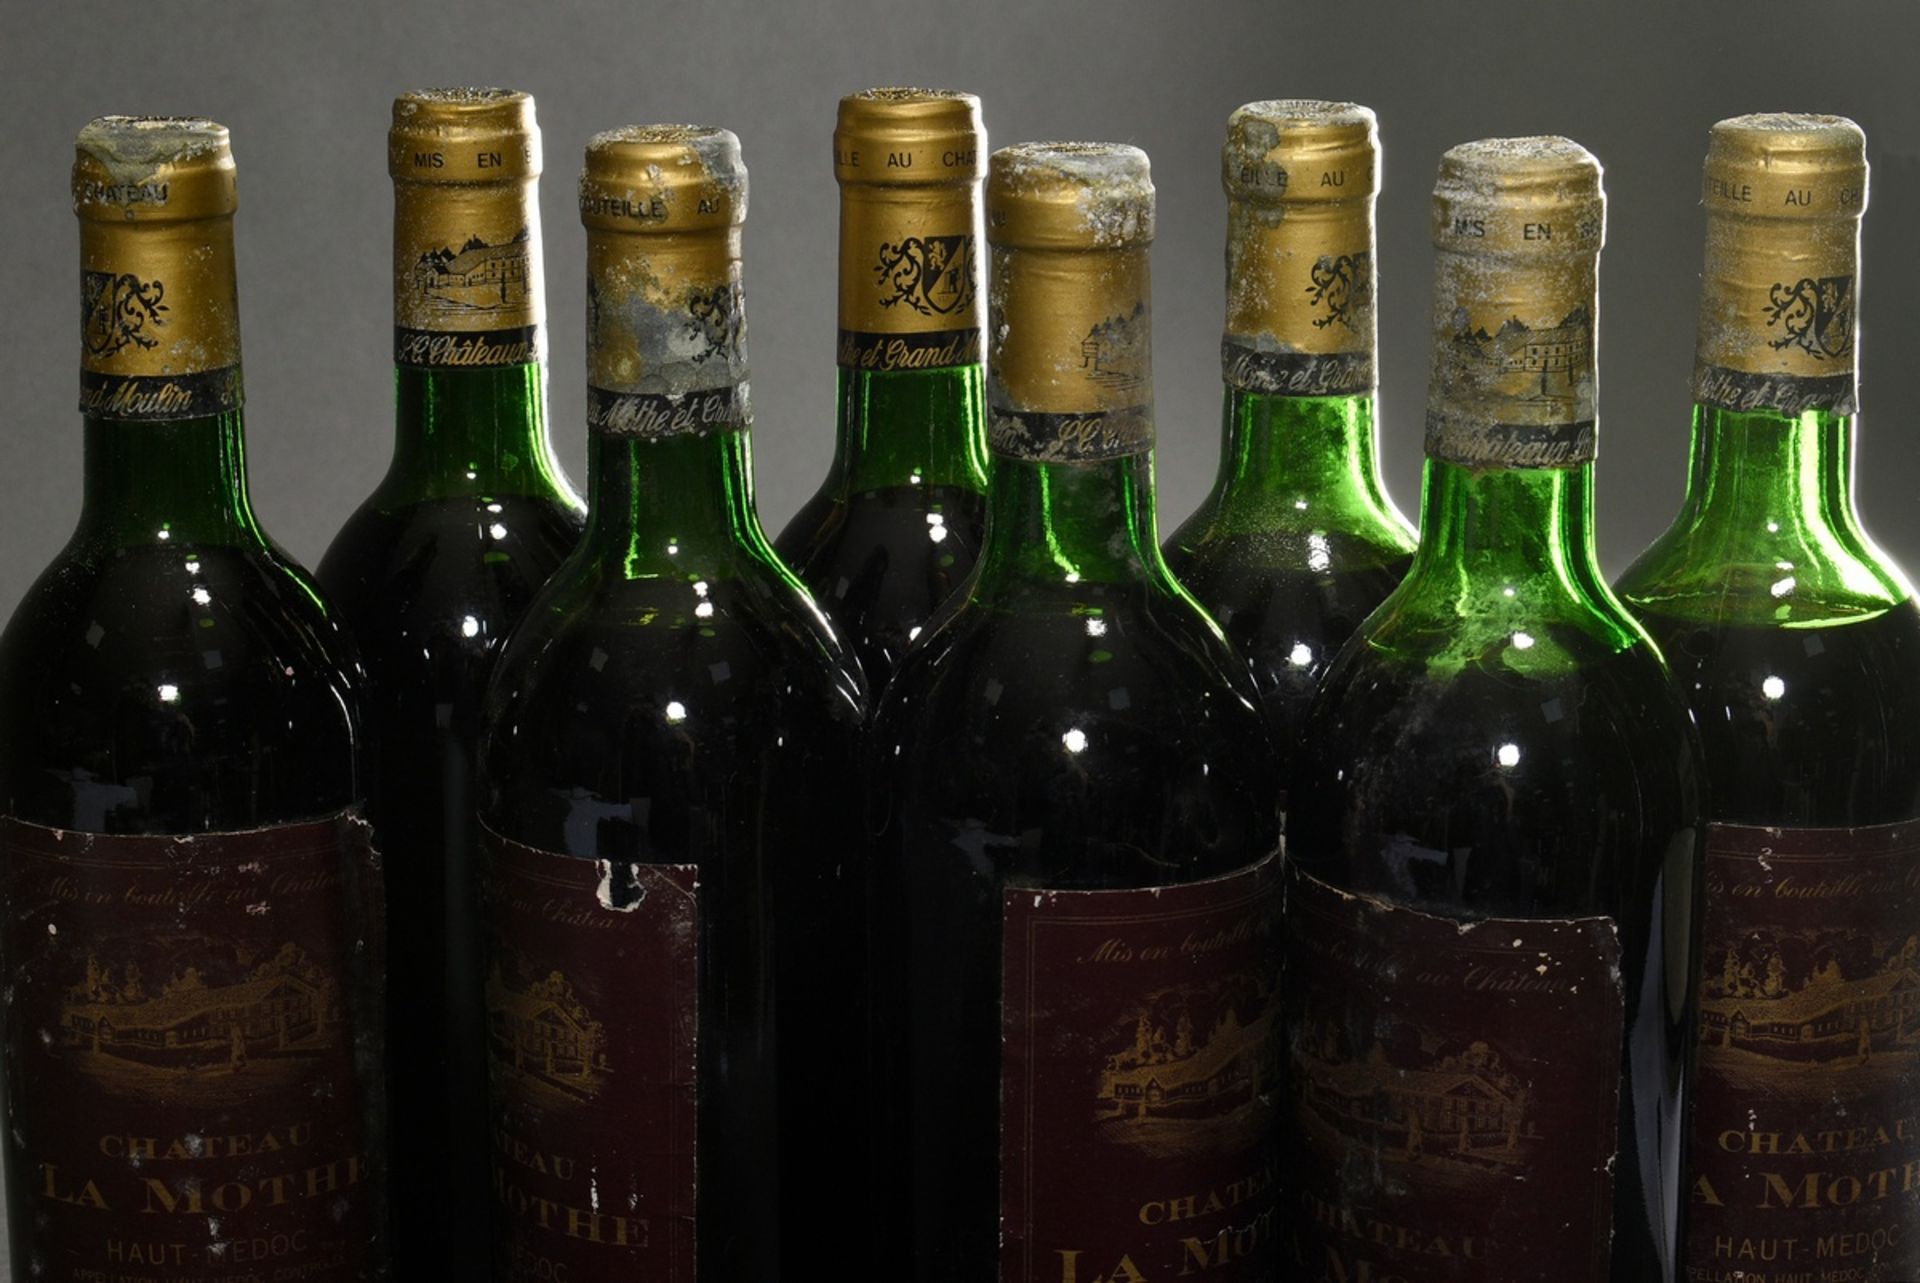 6 Bottles 1985 Chateau La Mothe, mebac, Haut Medoc, France, red wine, 0,75l, good cellar storage th - Image 4 of 5